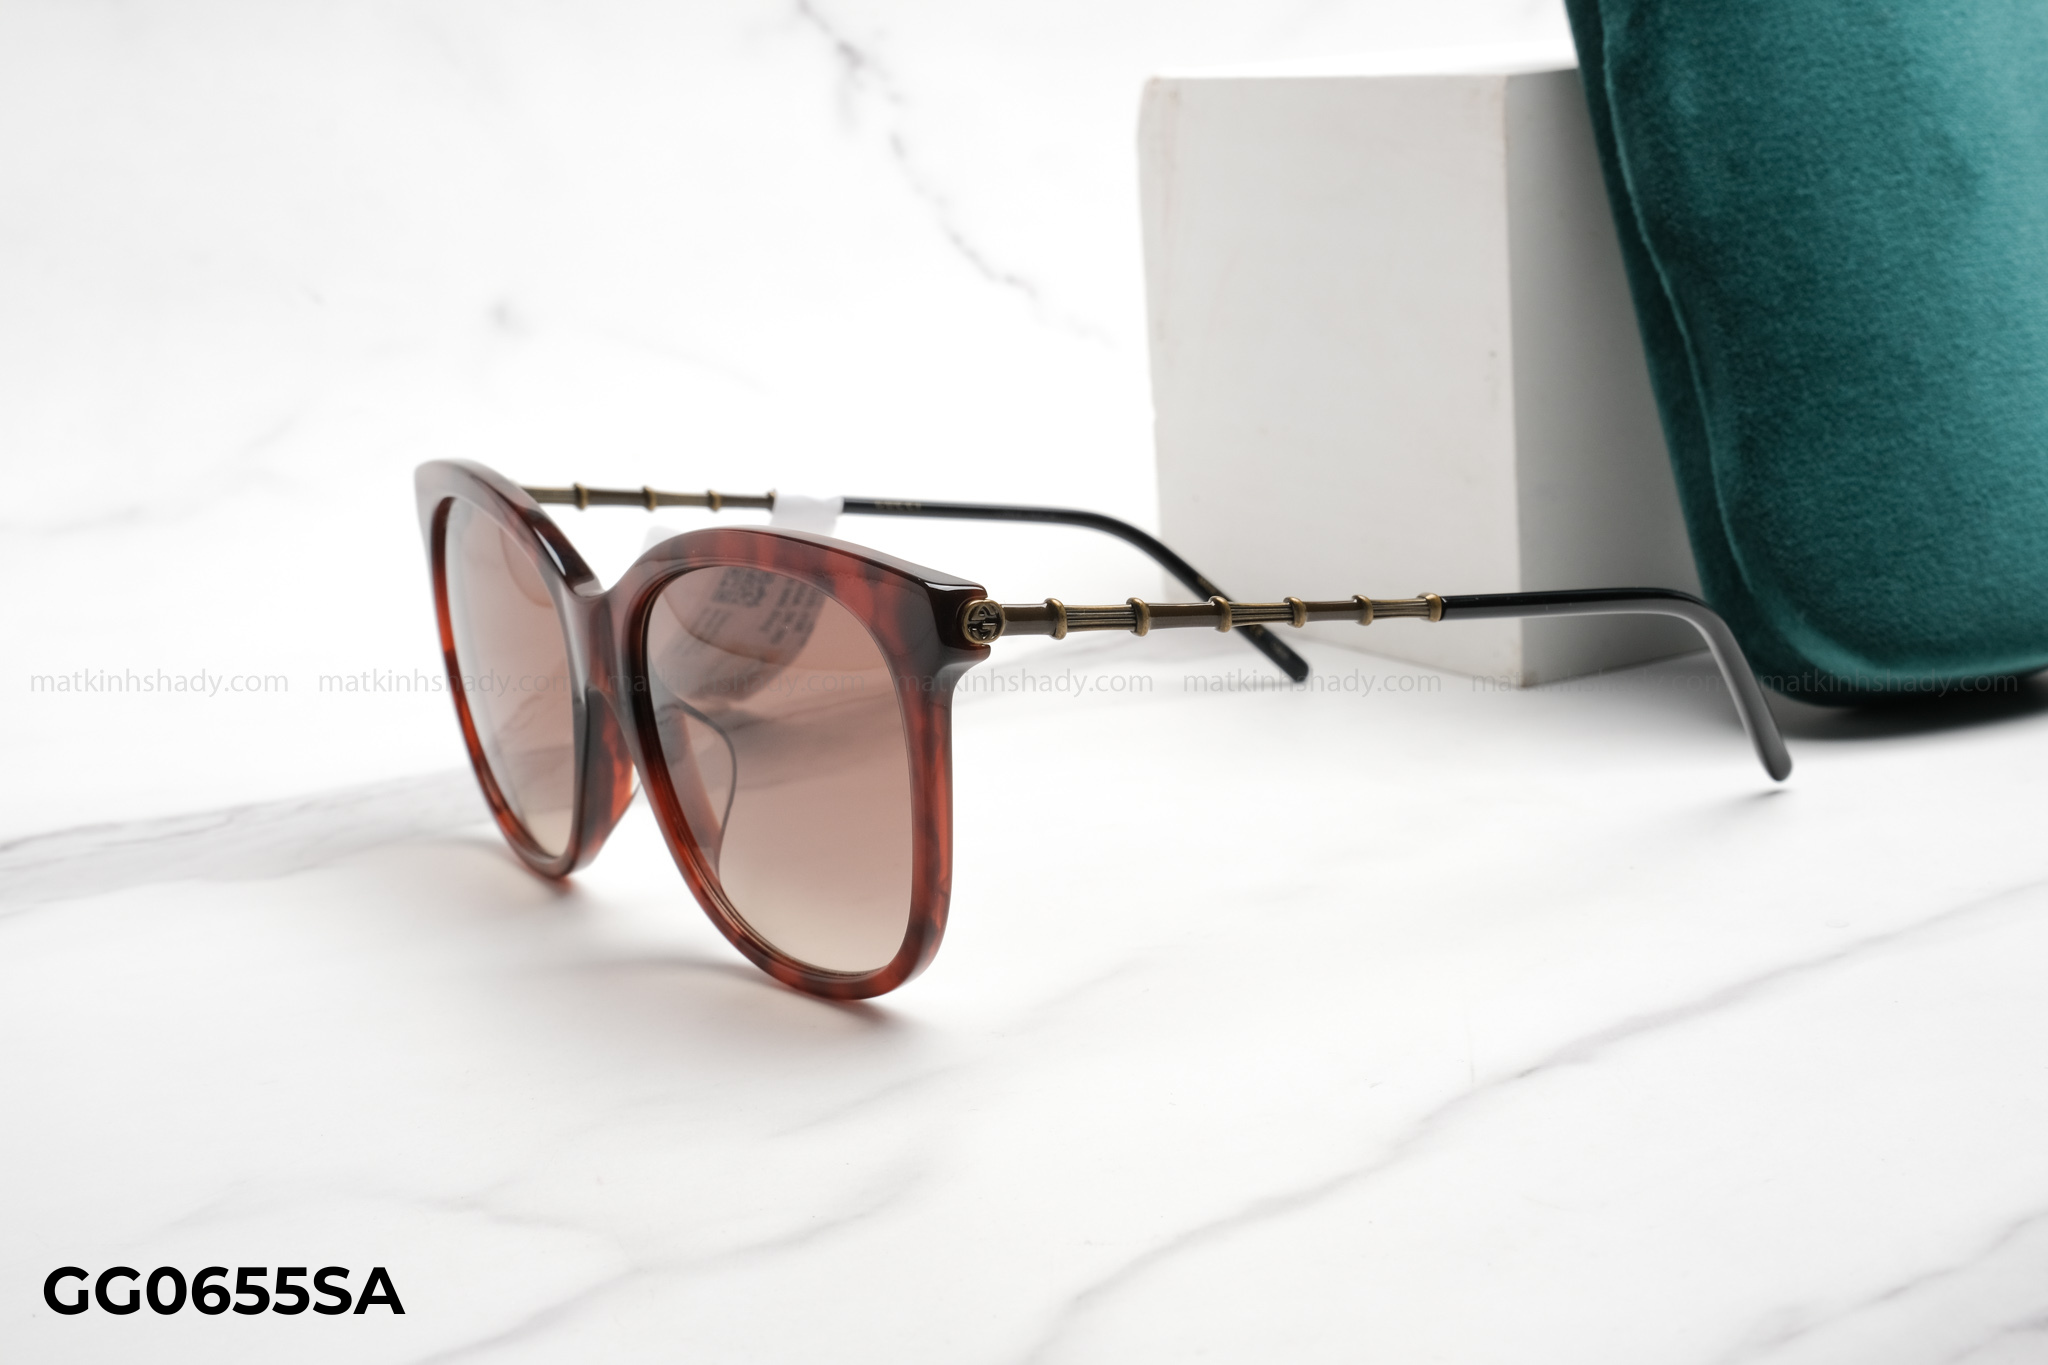  Gucci Eyewear - Sunglasses - GG0655SA 